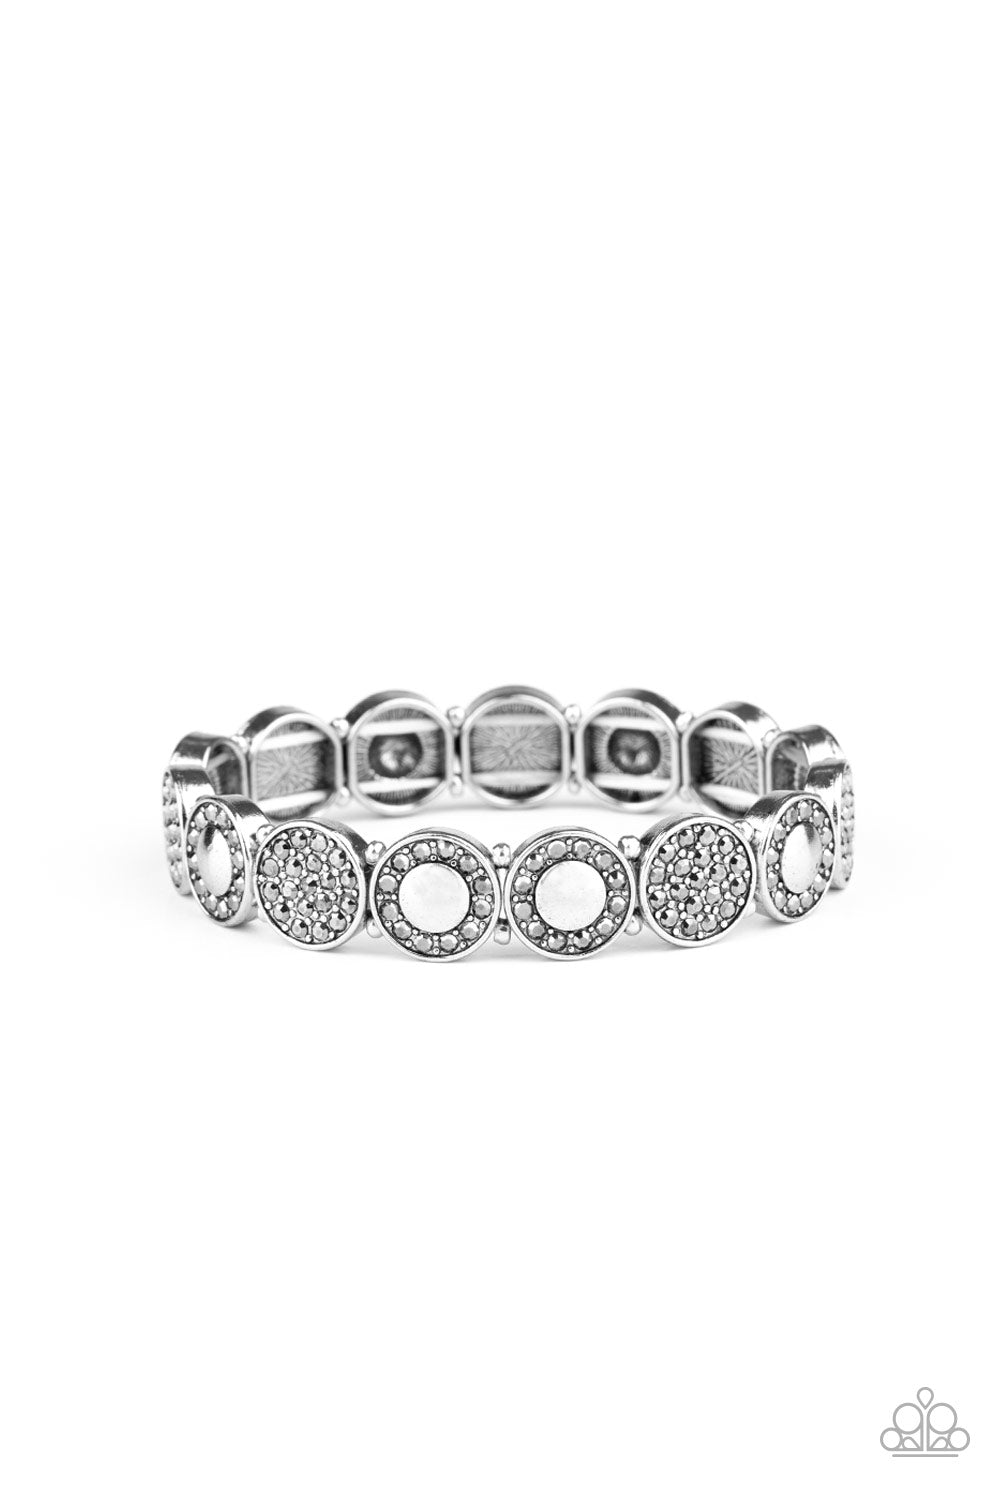 Glamour Garden - silver - Paparazzi bracelet